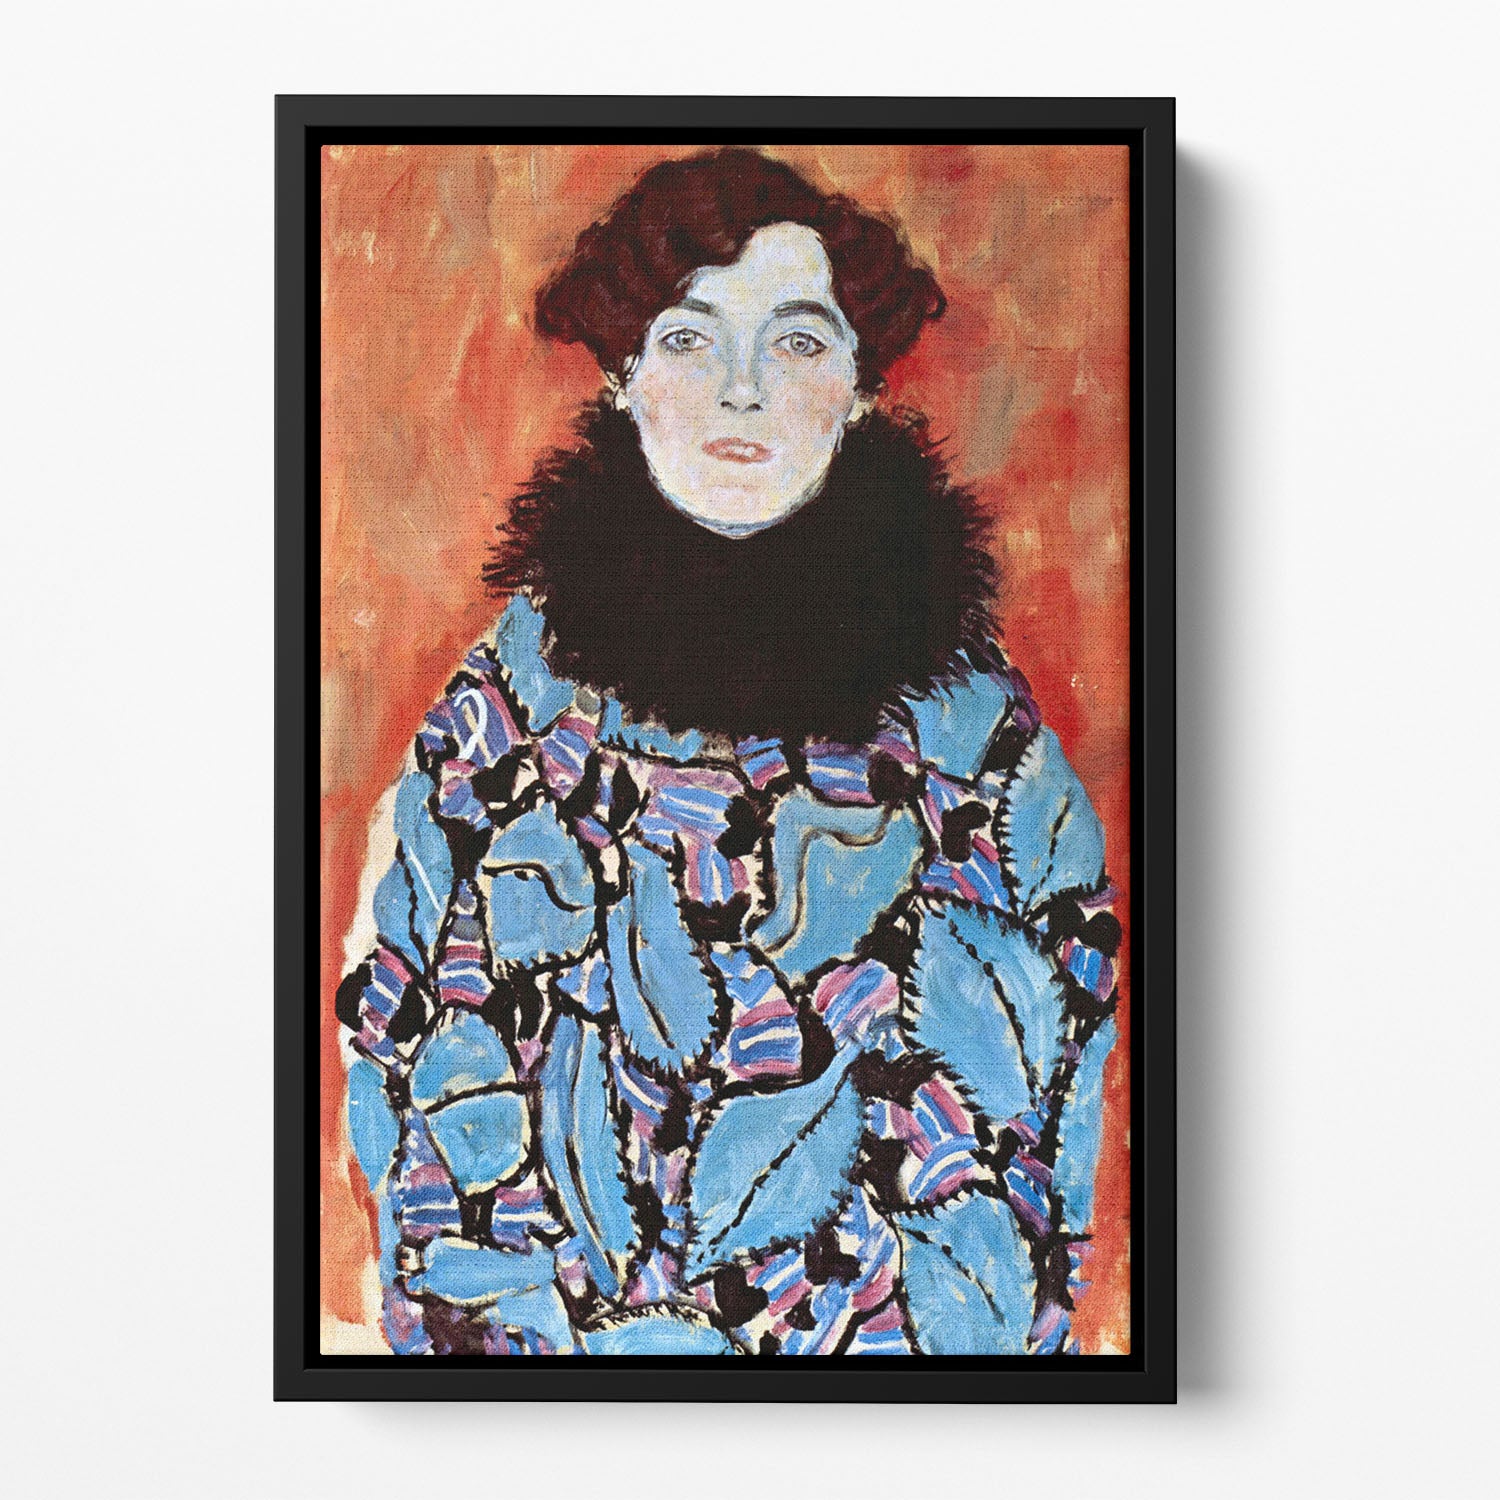 Johanna Staude by Klimt Floating Framed Canvas